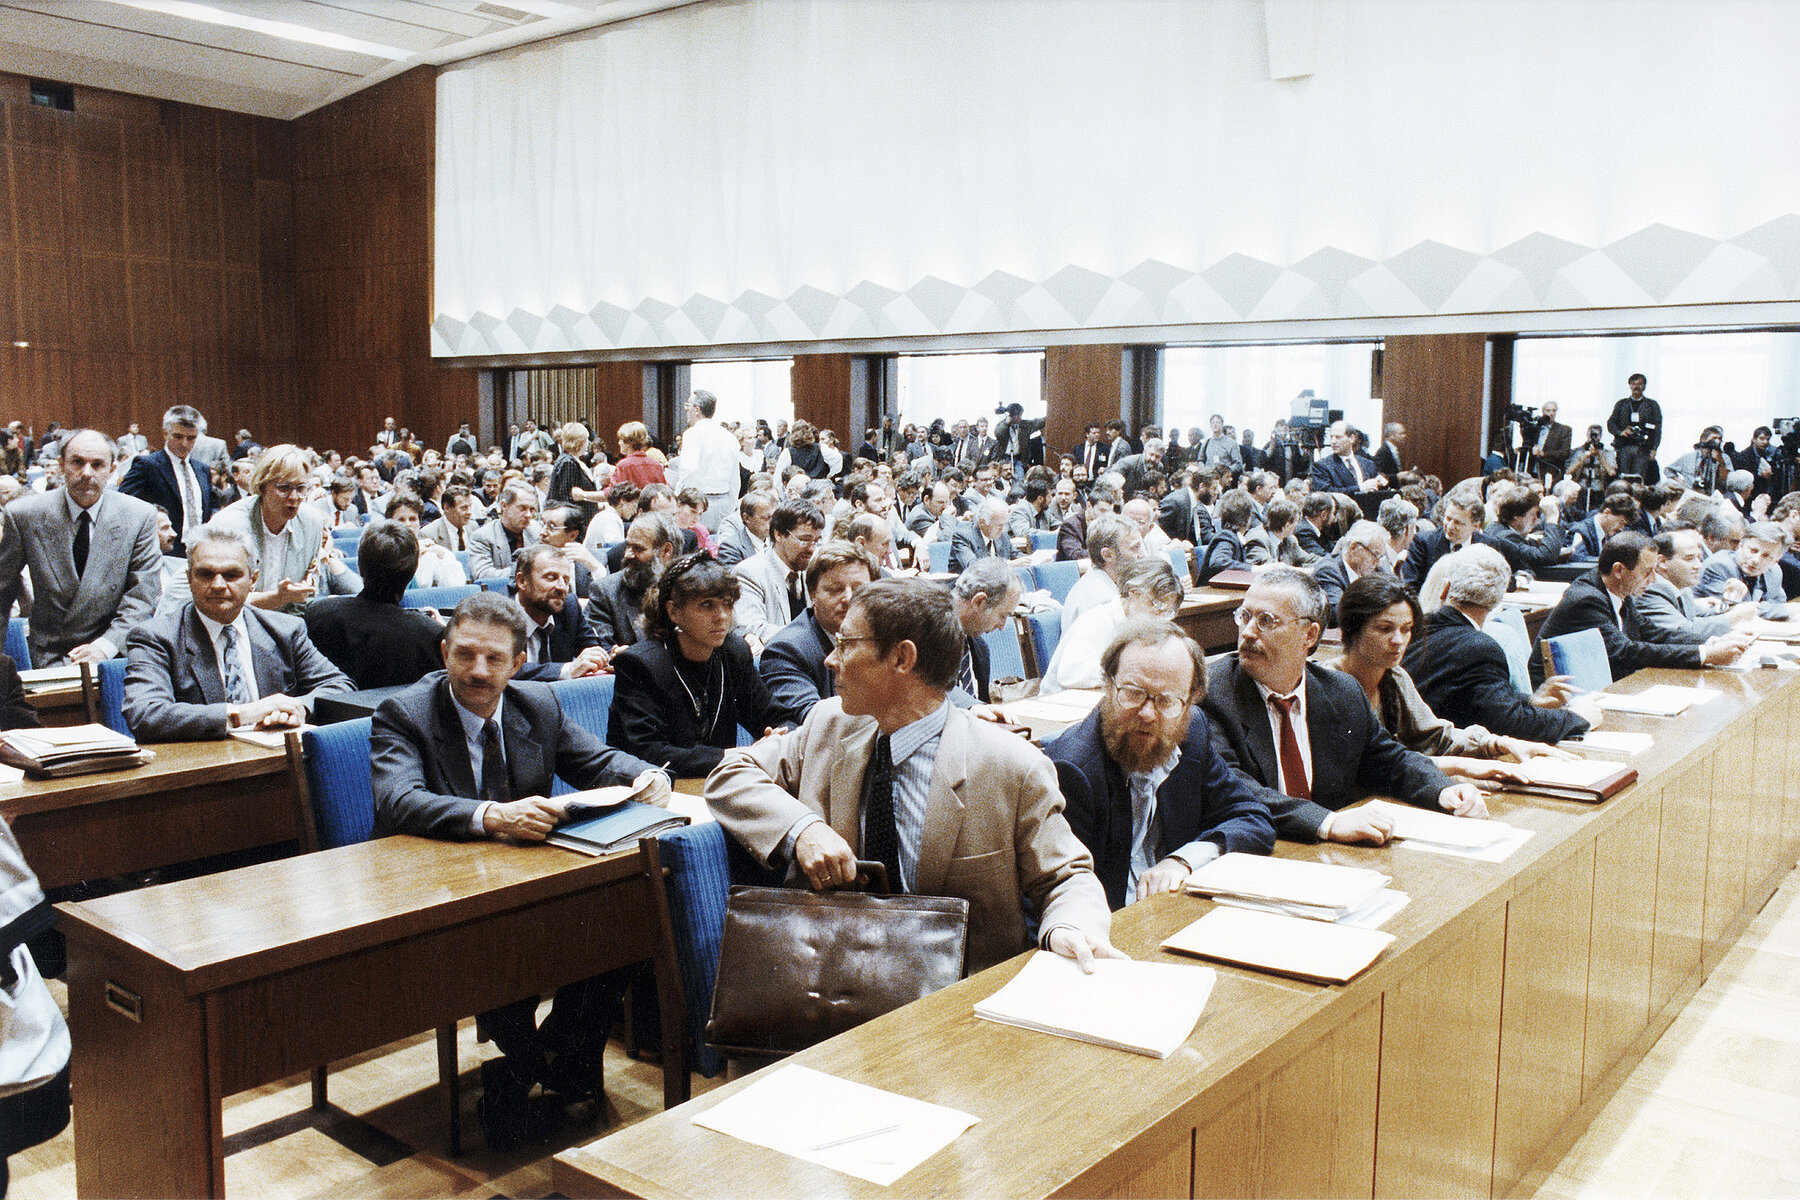 Politicians seated in rows in the Leninsaal (Lenin hall) in the Haus am Werderschen Markt.